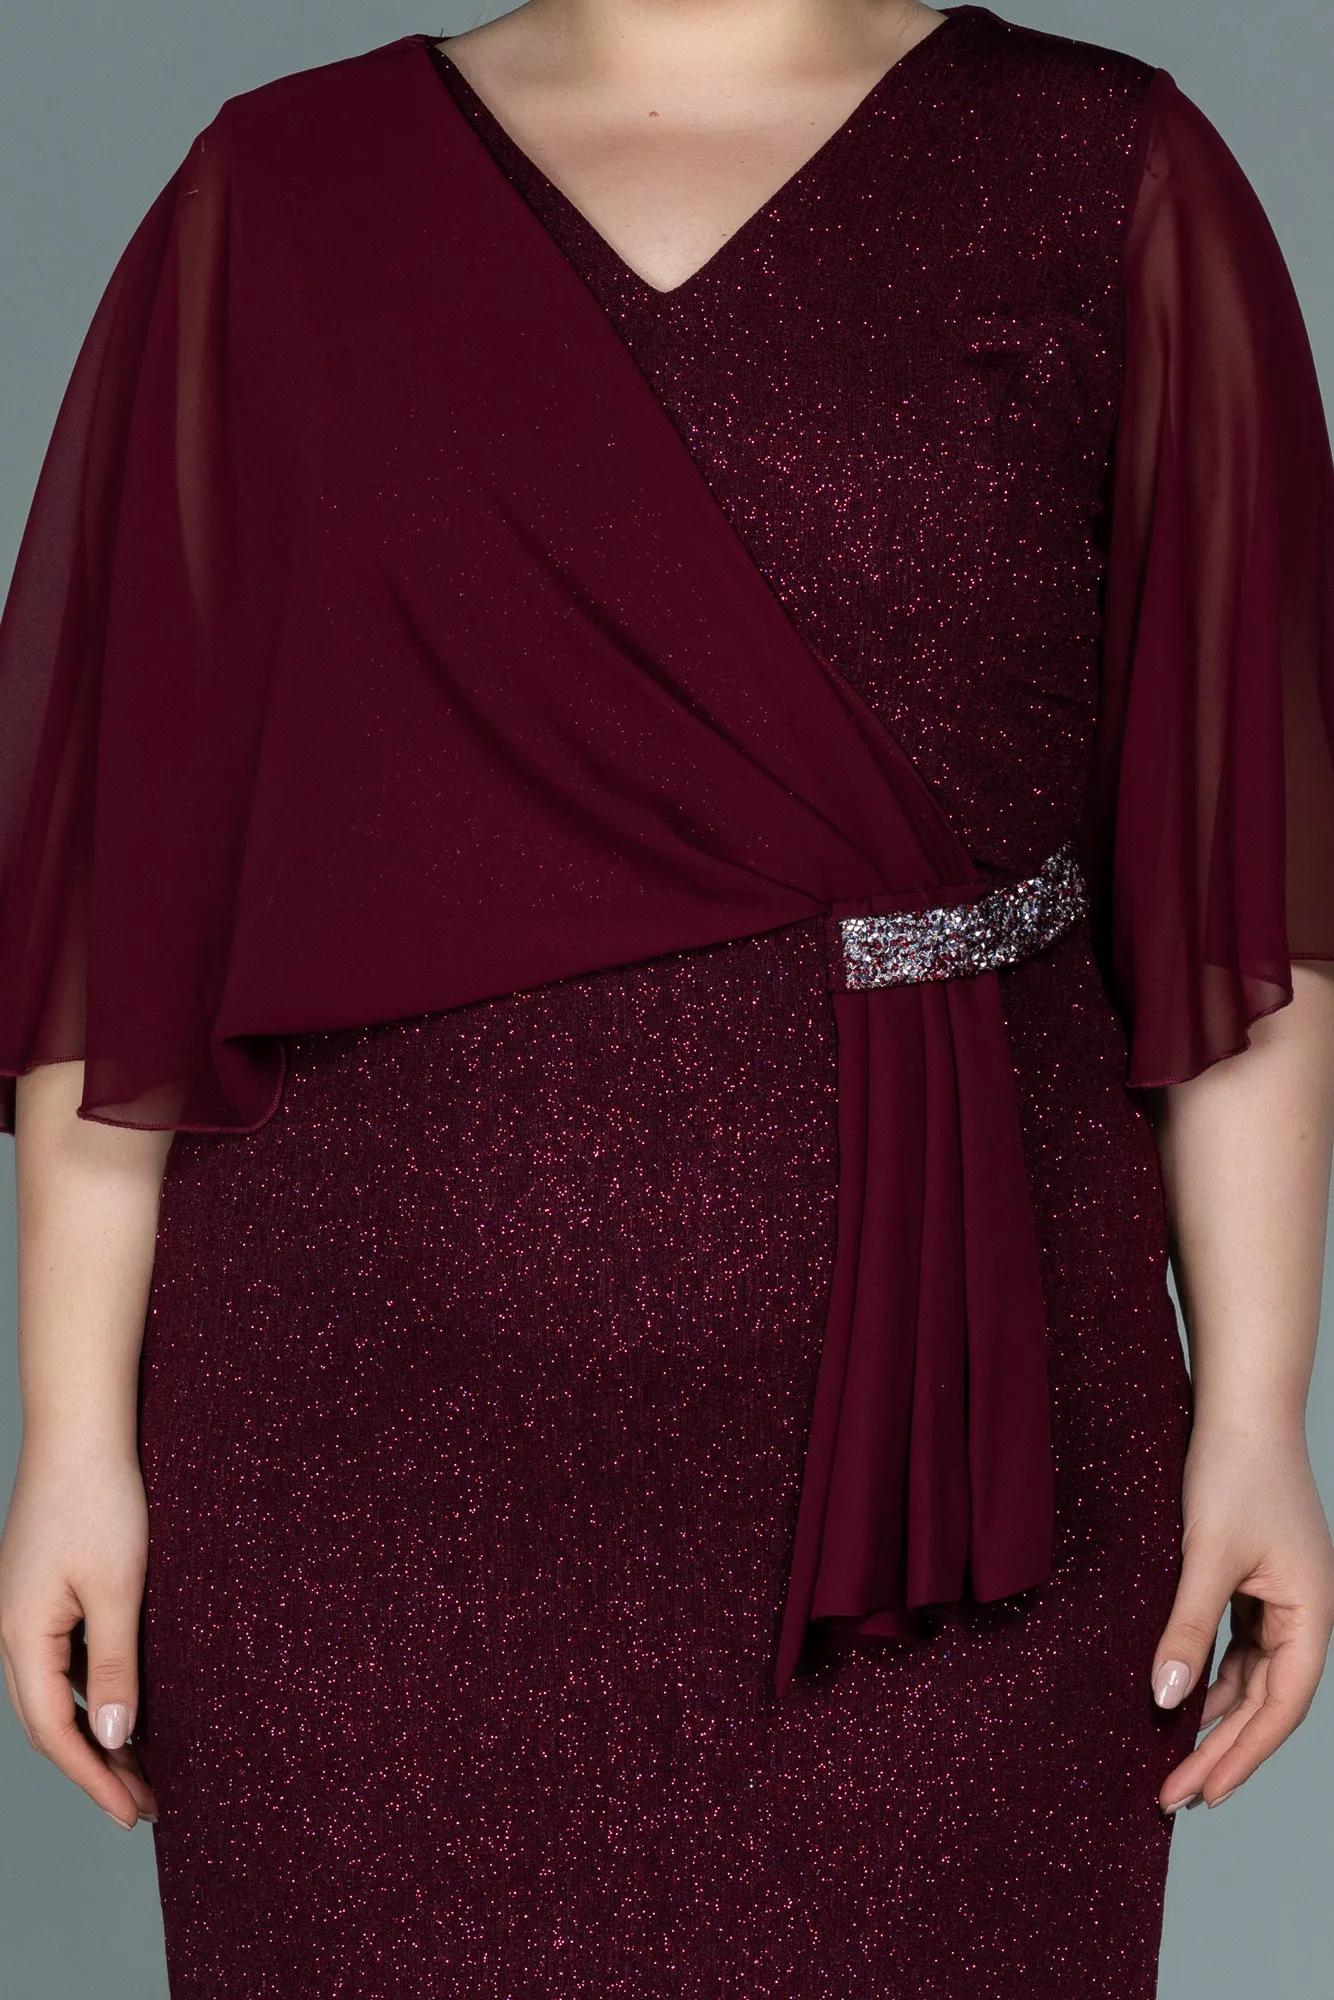 Burgundy-Midi Plus Size Evening Dress ABK1567